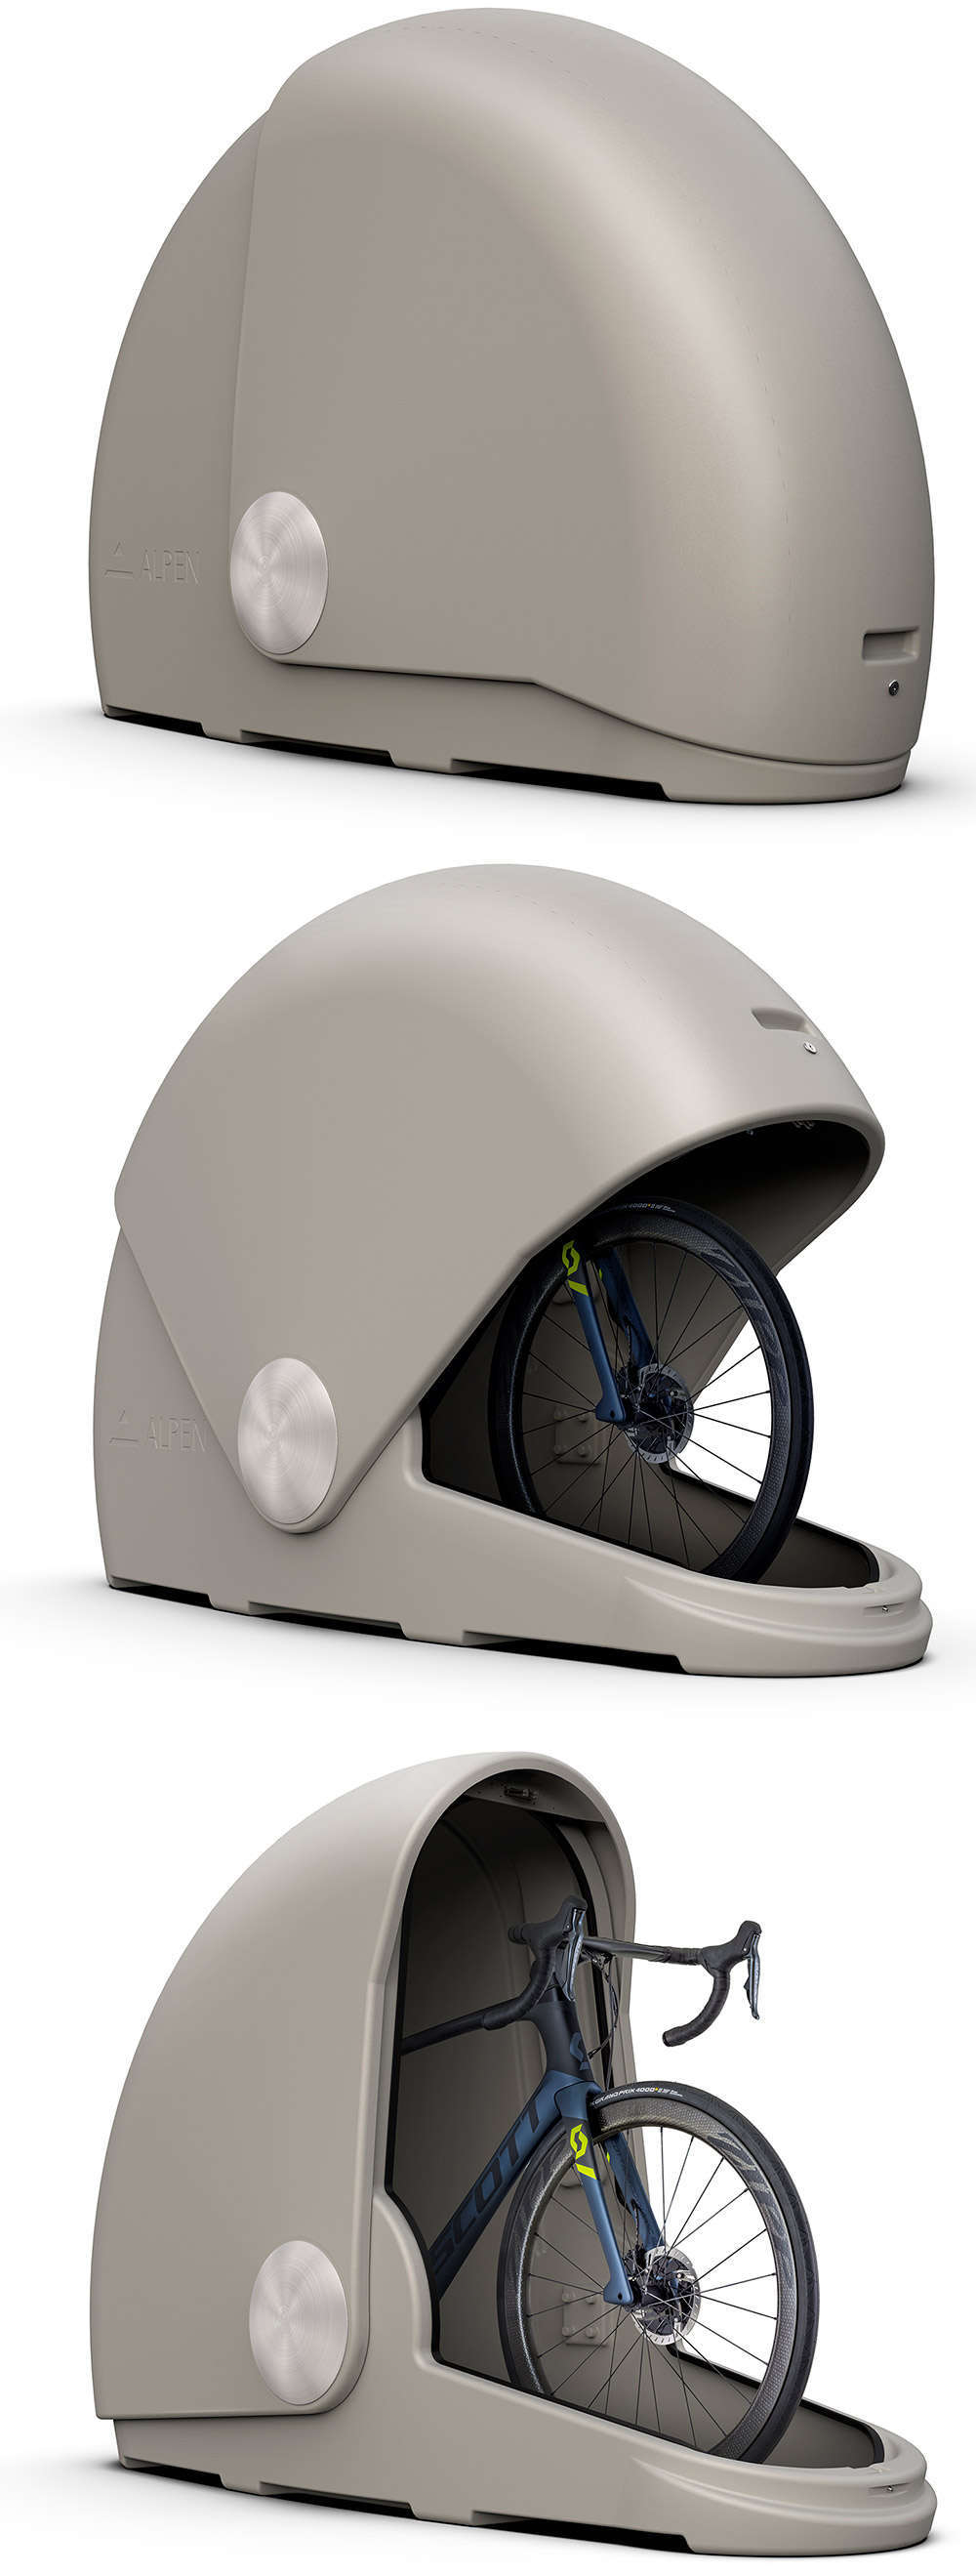 En TodoMountainBike: Alpen Bike Capsule, una caja fuerte de aspecto futurista para guardar la bicicleta